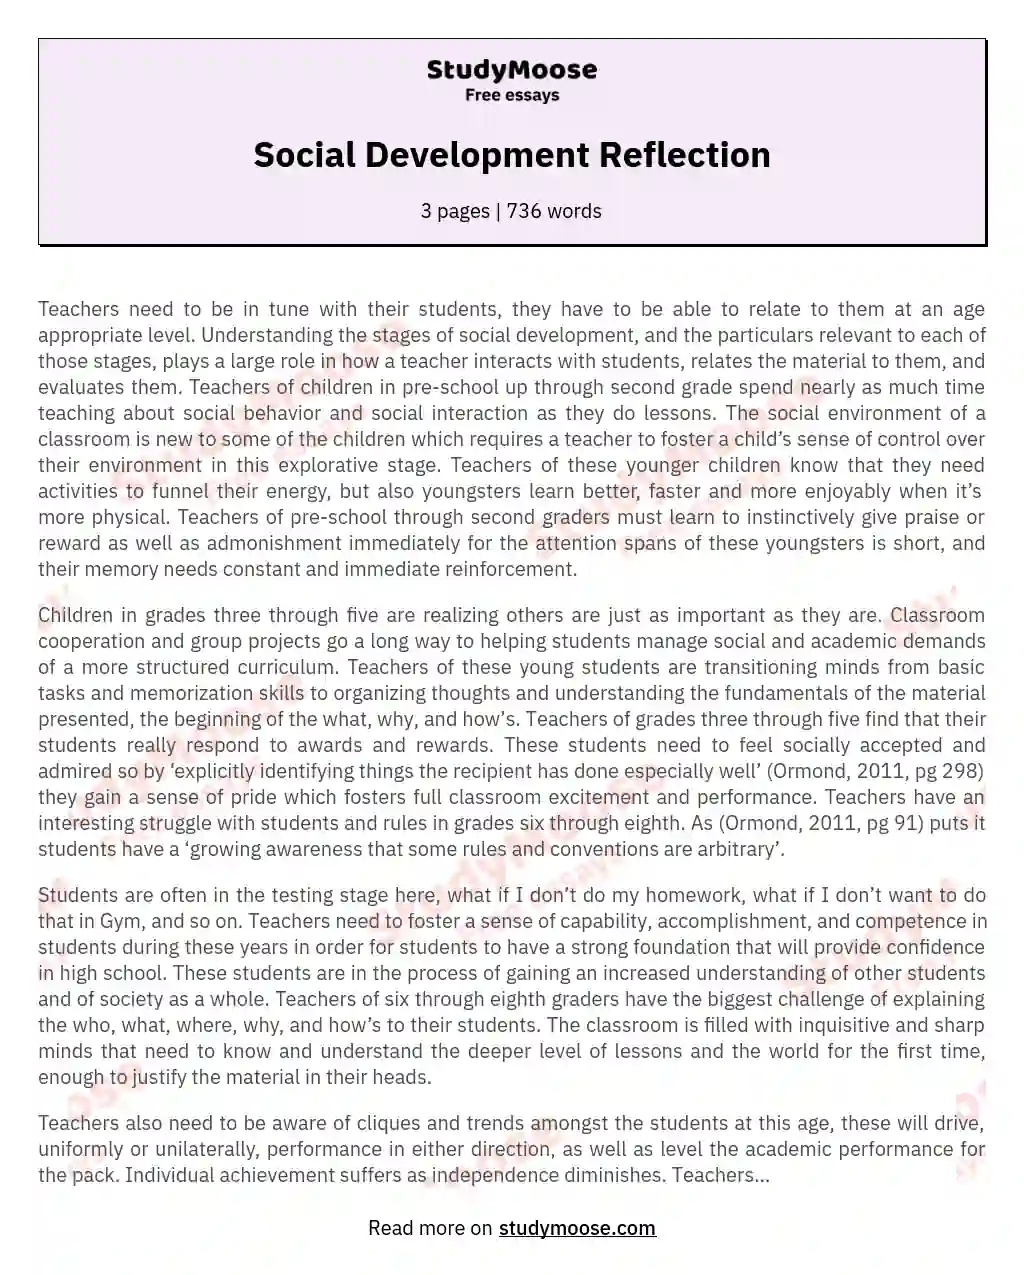 Social Development Reflection essay